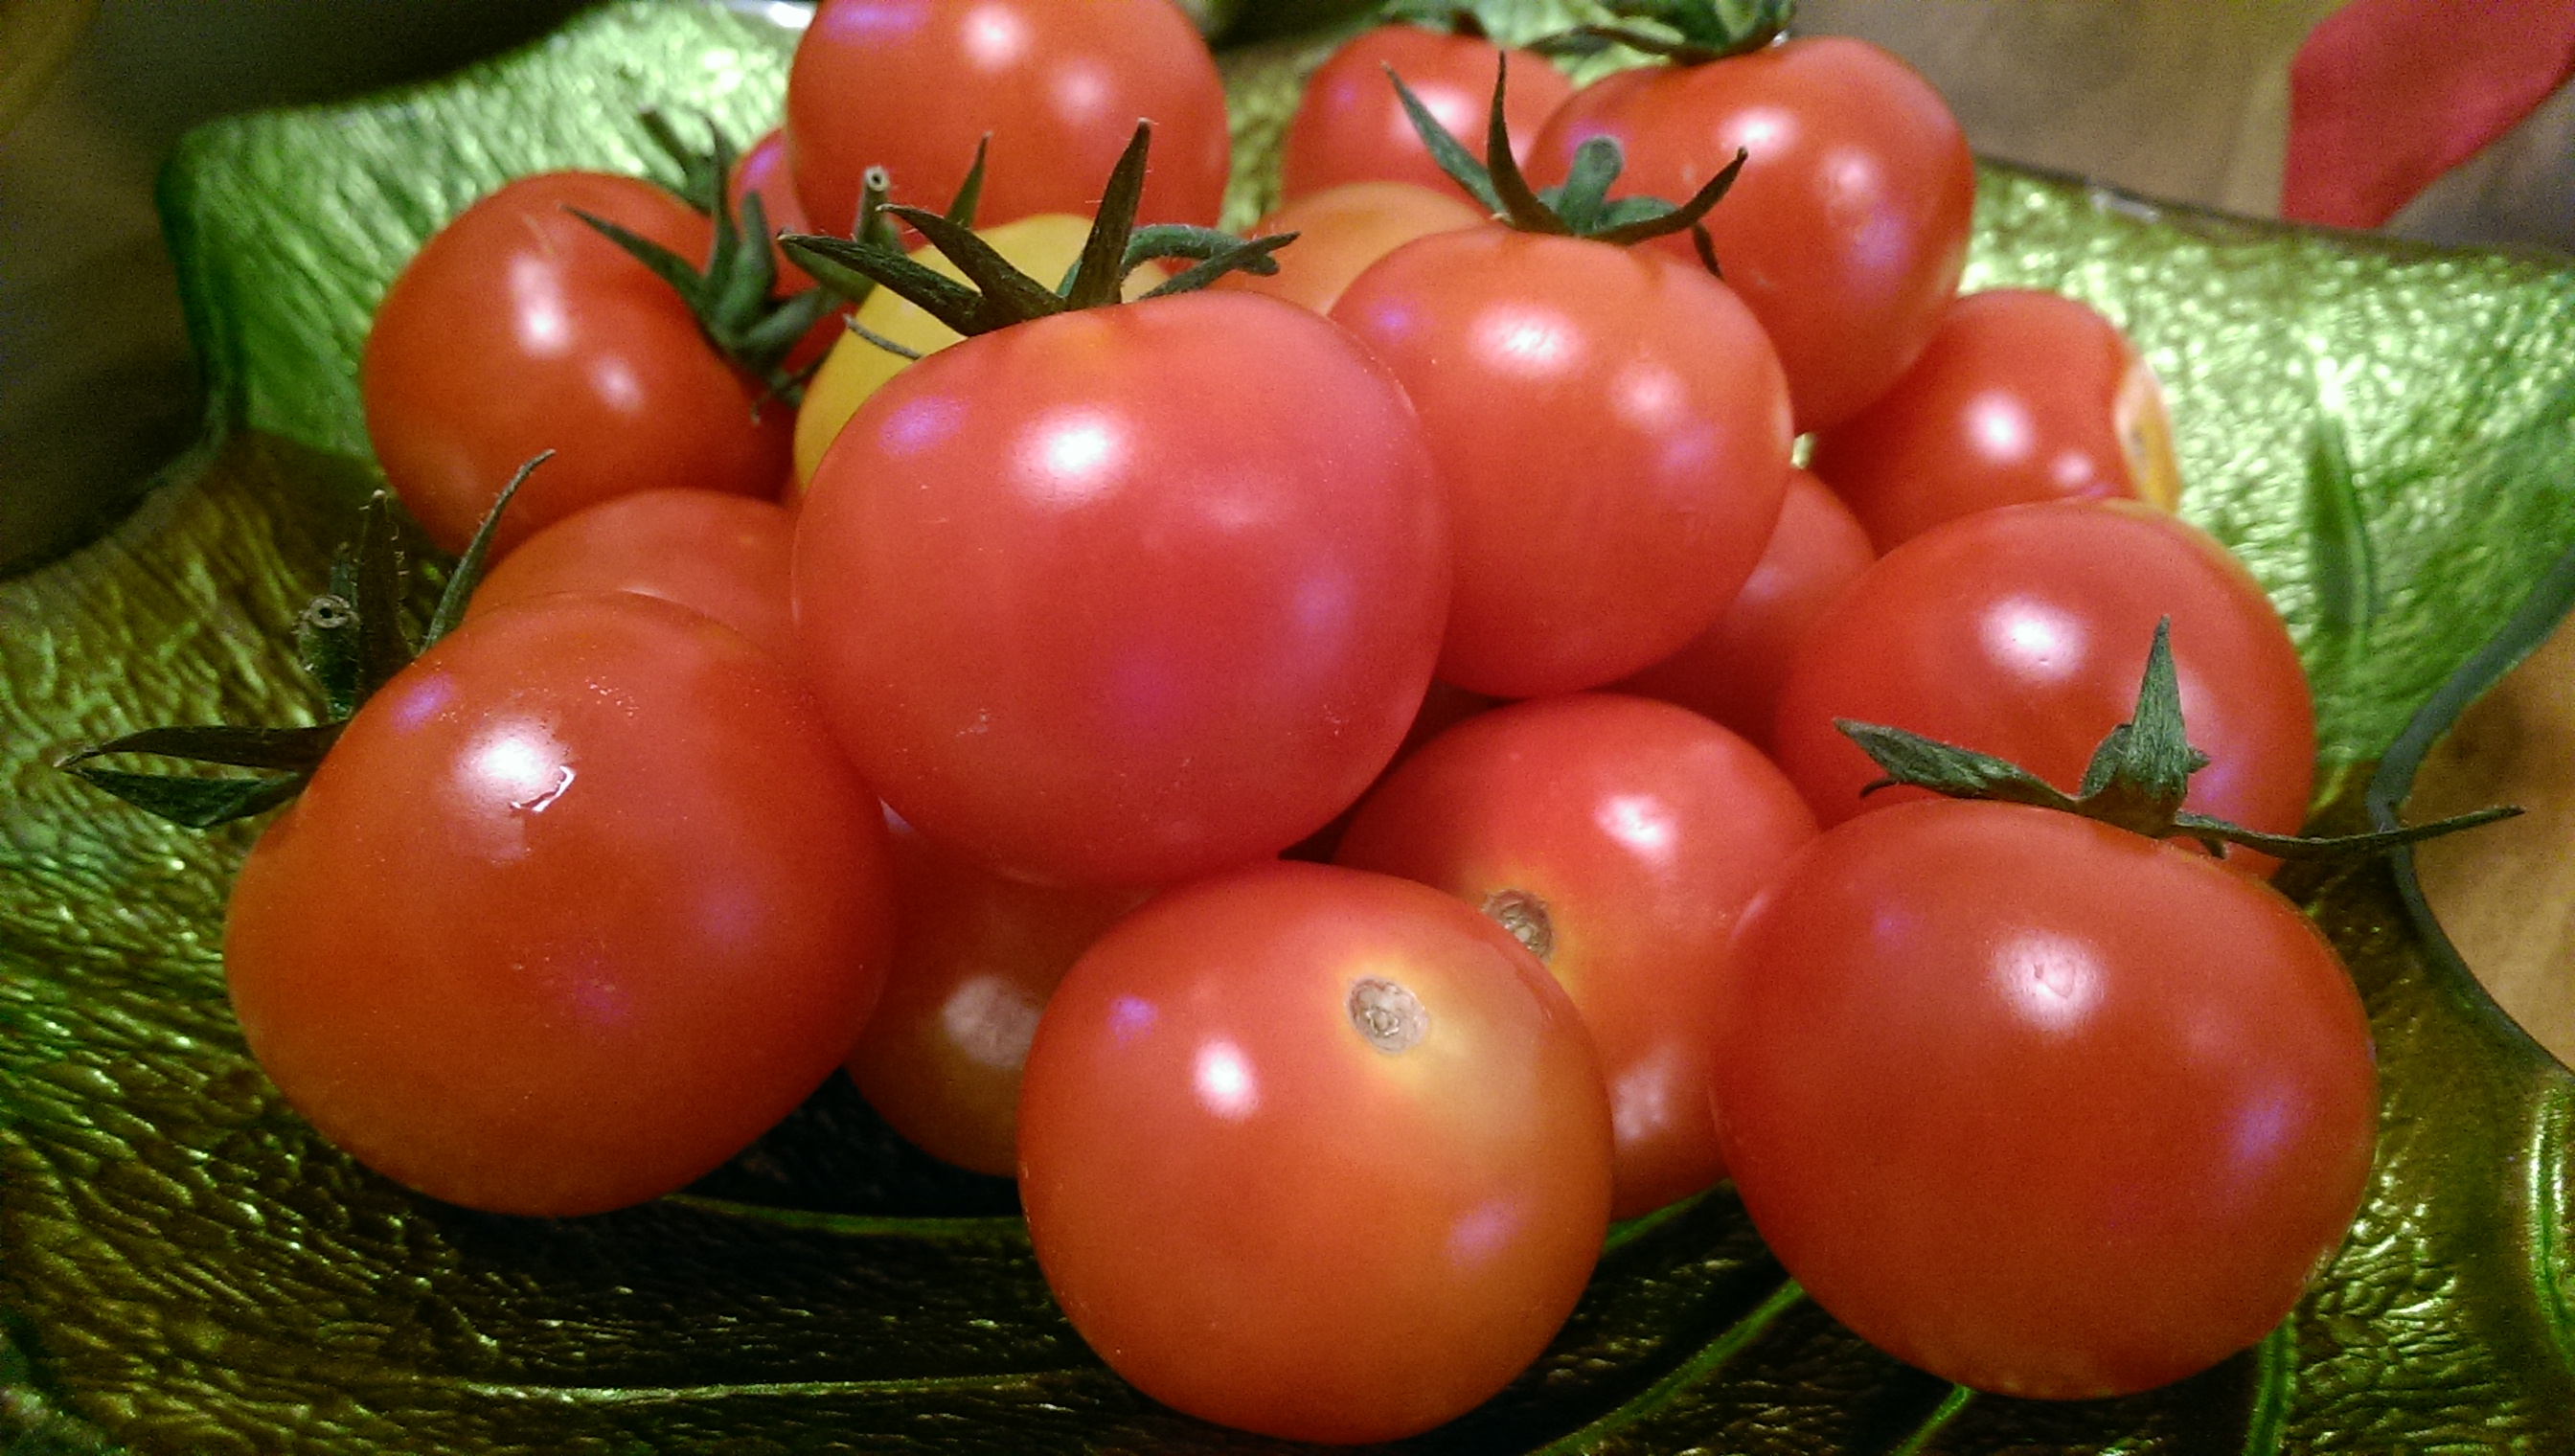 Even A Tomato a Day keeps your body Perfect خوردن حتی روزی یک عدد گوجه فرنگی، بدنتون رو عالی نگه میداره